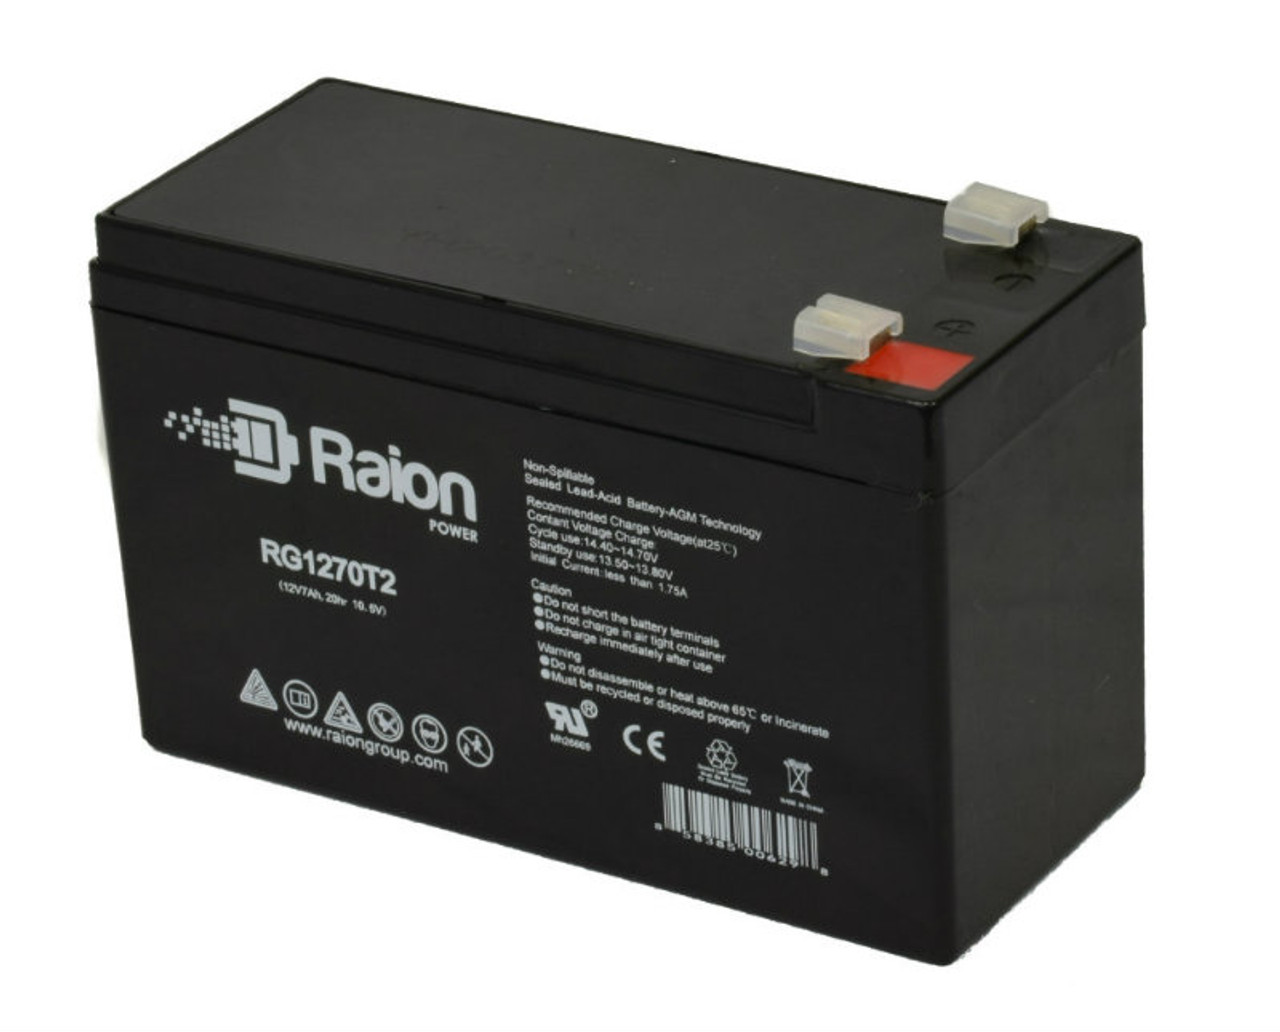 Raion Power RG1270T1 12V 7Ah Non-Spillable Replacement Battery for ELK Battery ELK-1270